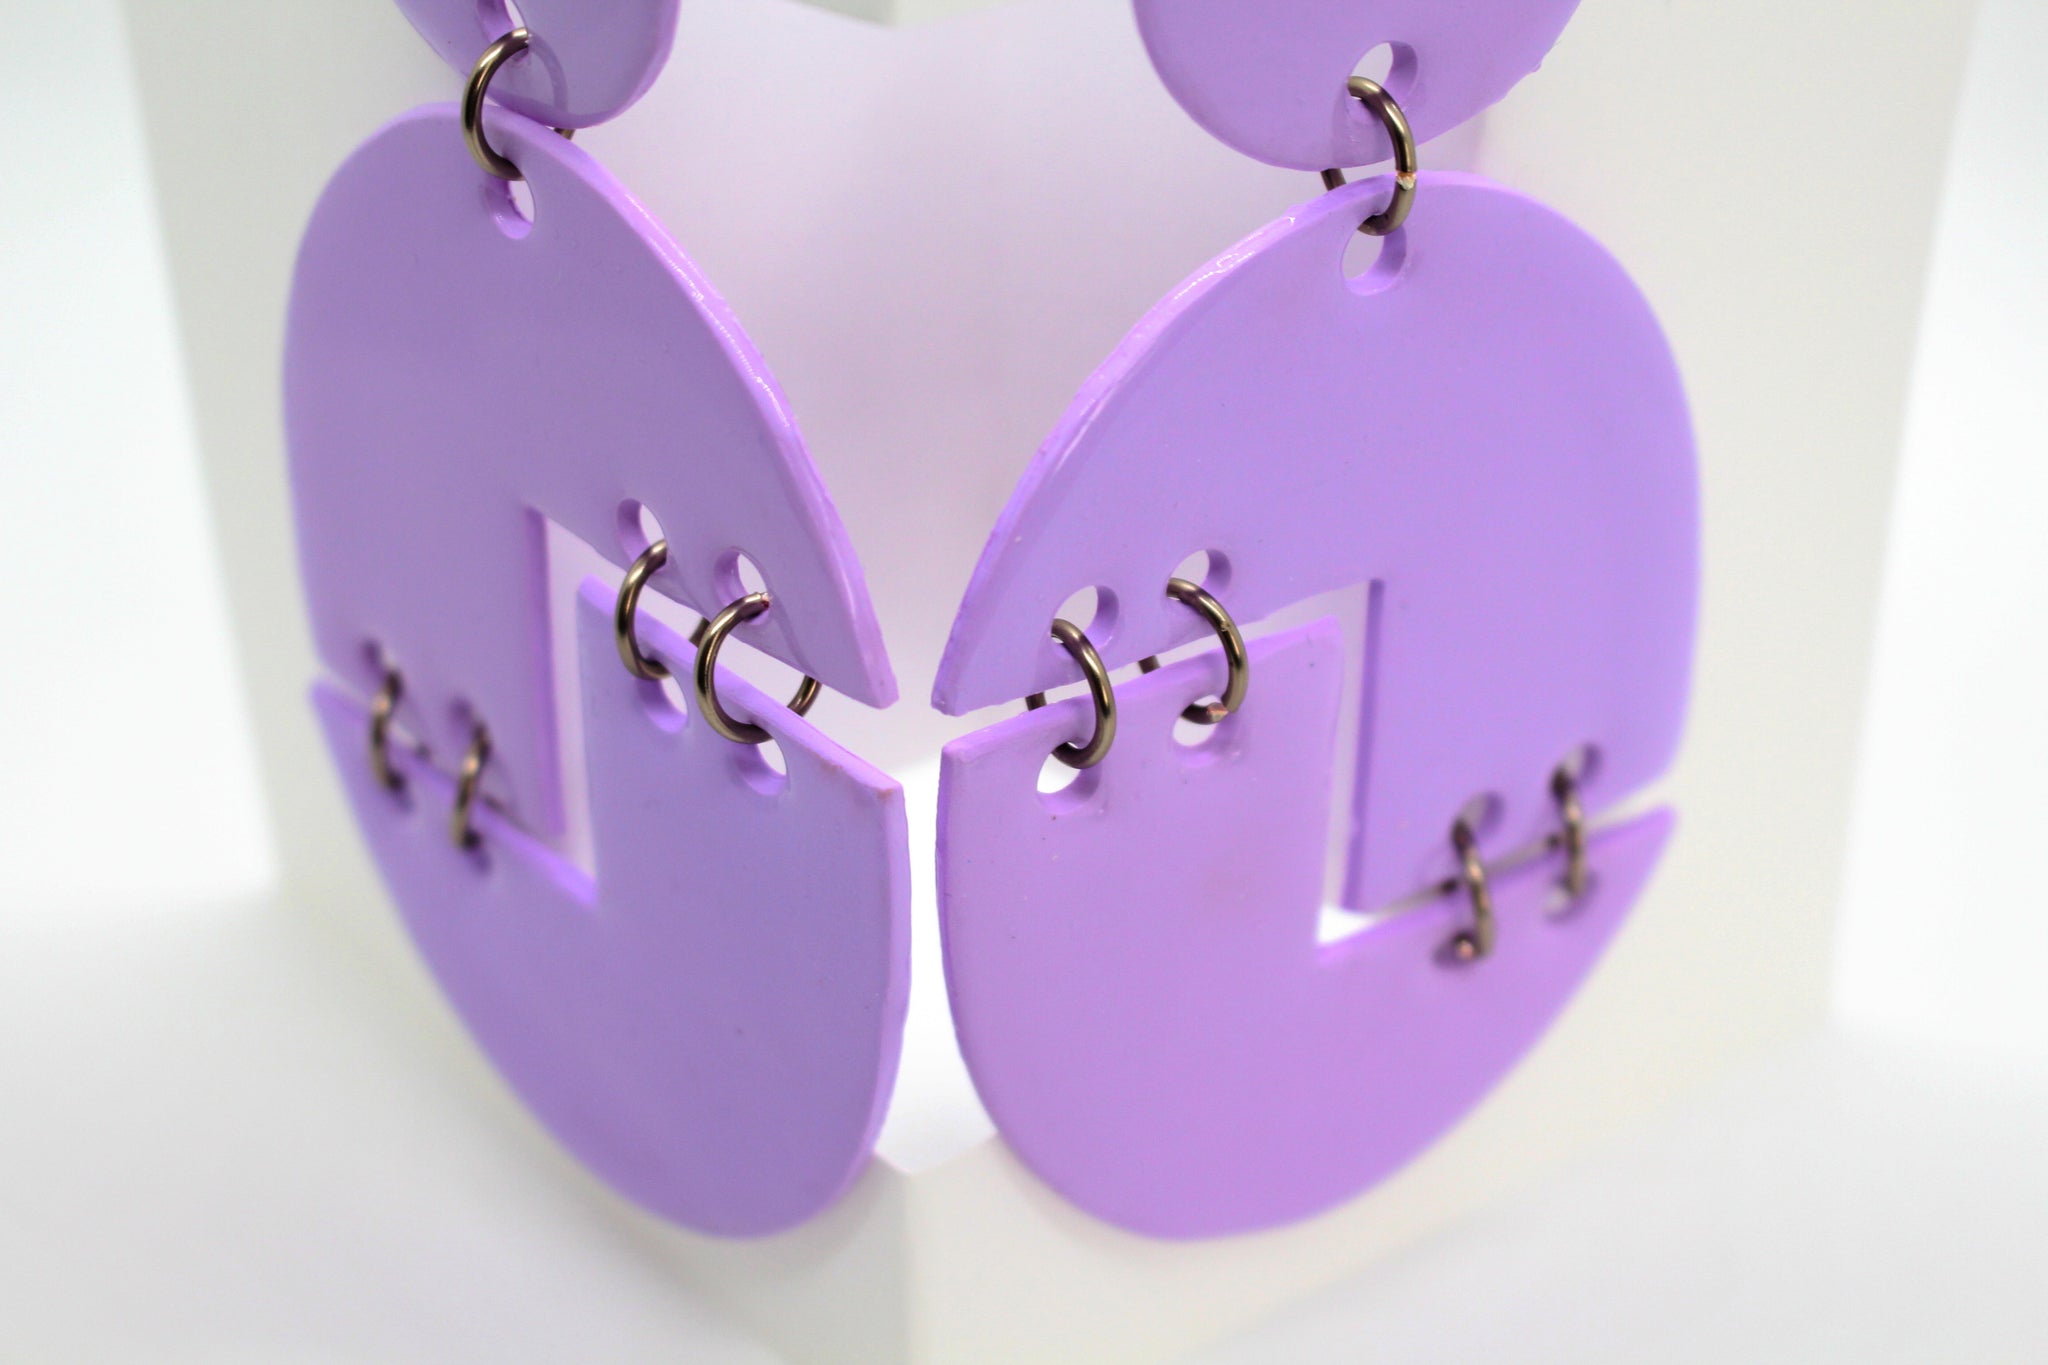 KD-0095b "Pya" Lilac Earrings